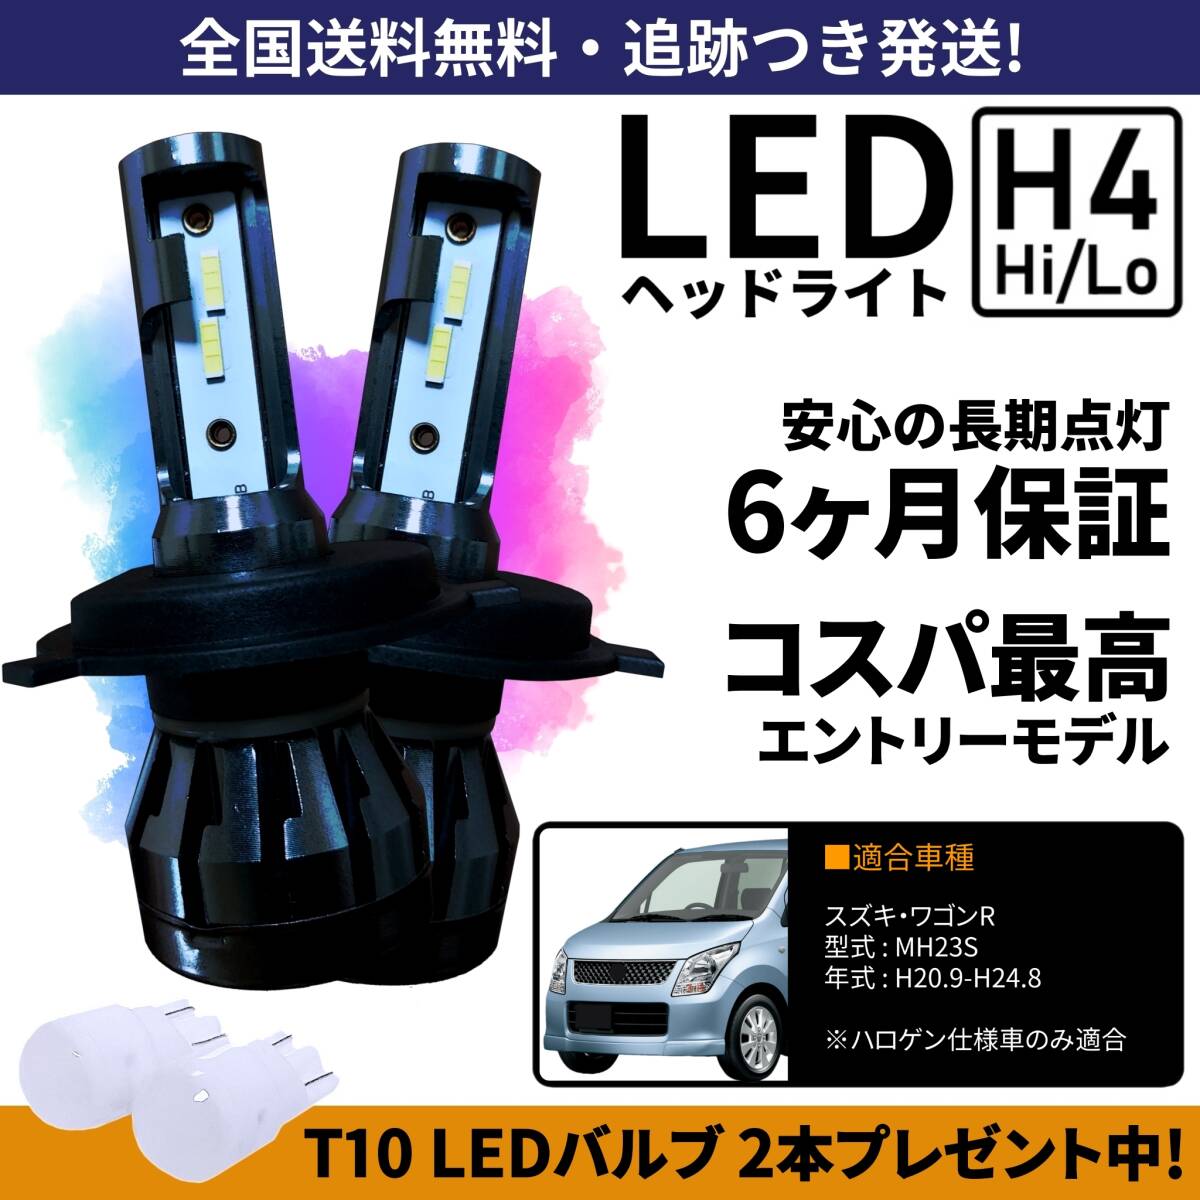 [ free shipping ] Suzuki Wagon R MH23S LED head light H4 Hi/Lo white 6000K vehicle inspection correspondence with guarantee 